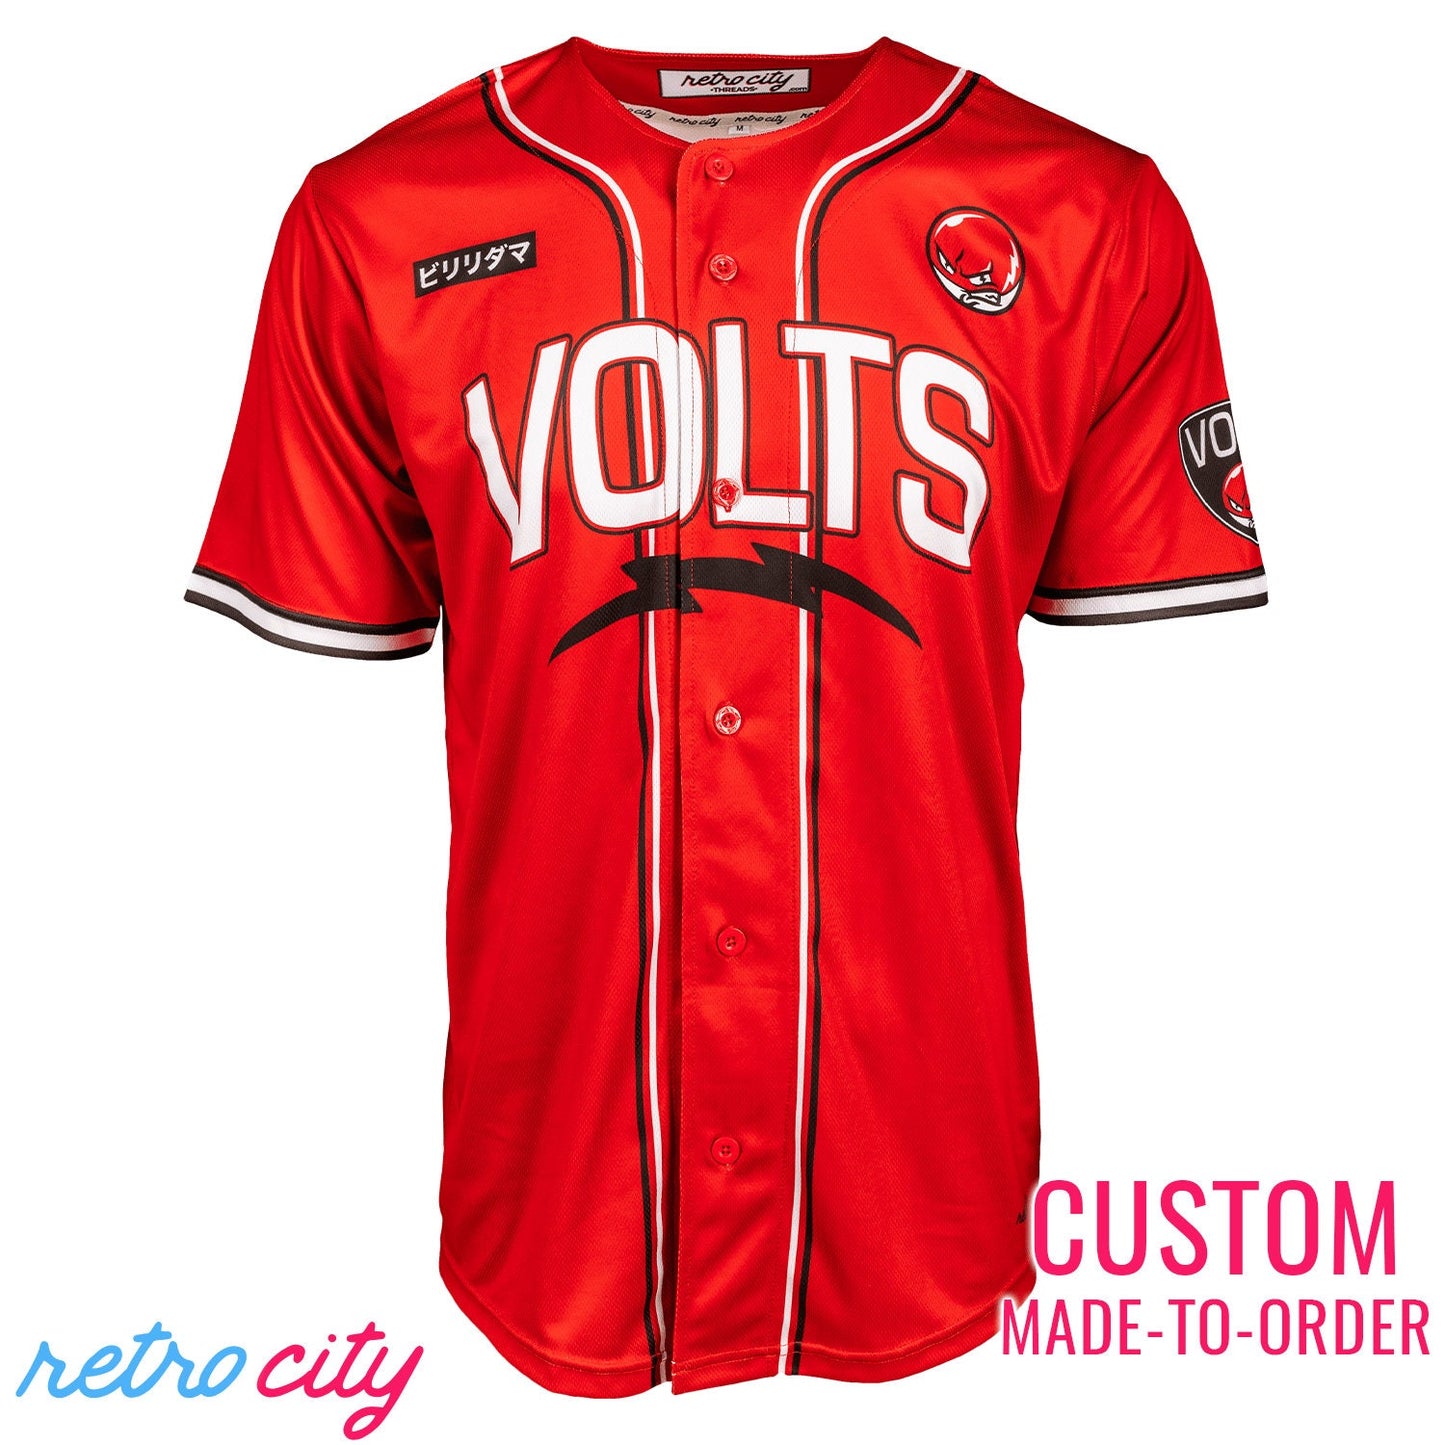 Volts Voltorb Pokemon Full-Button Baseball Jersey *CUSTOM*